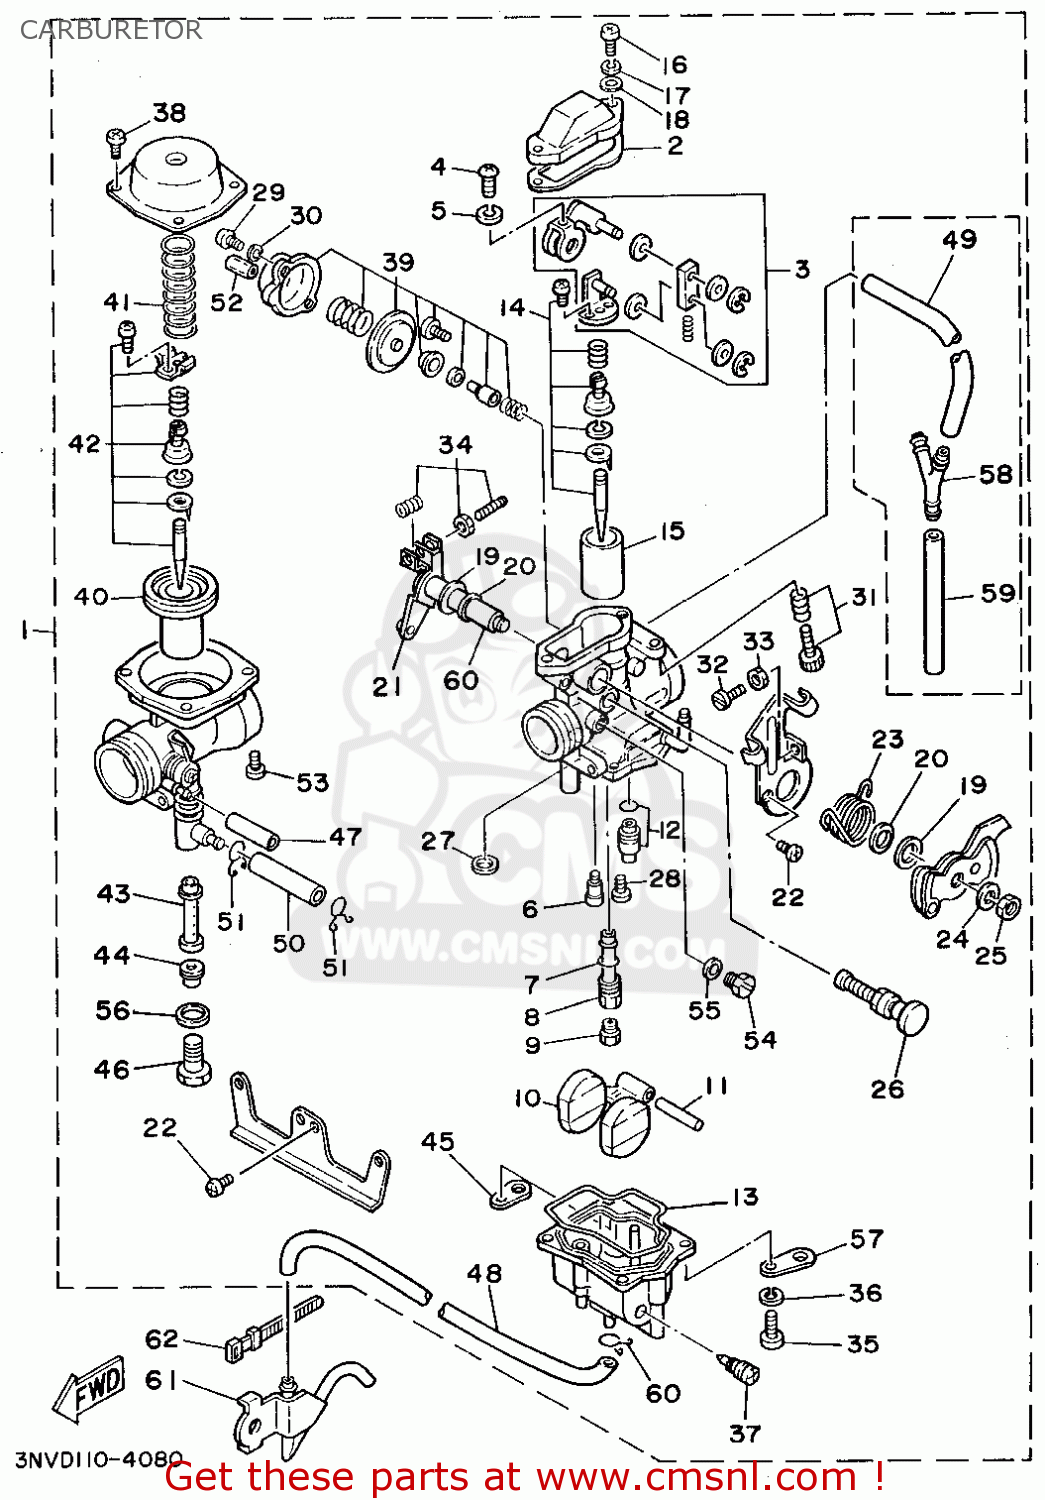 CARBURETOR ASSY 1 for XT350C 1994 (R) CALIFORNIA - order ... 08 yamaha rhino 700 efi wiring diagram free picture 